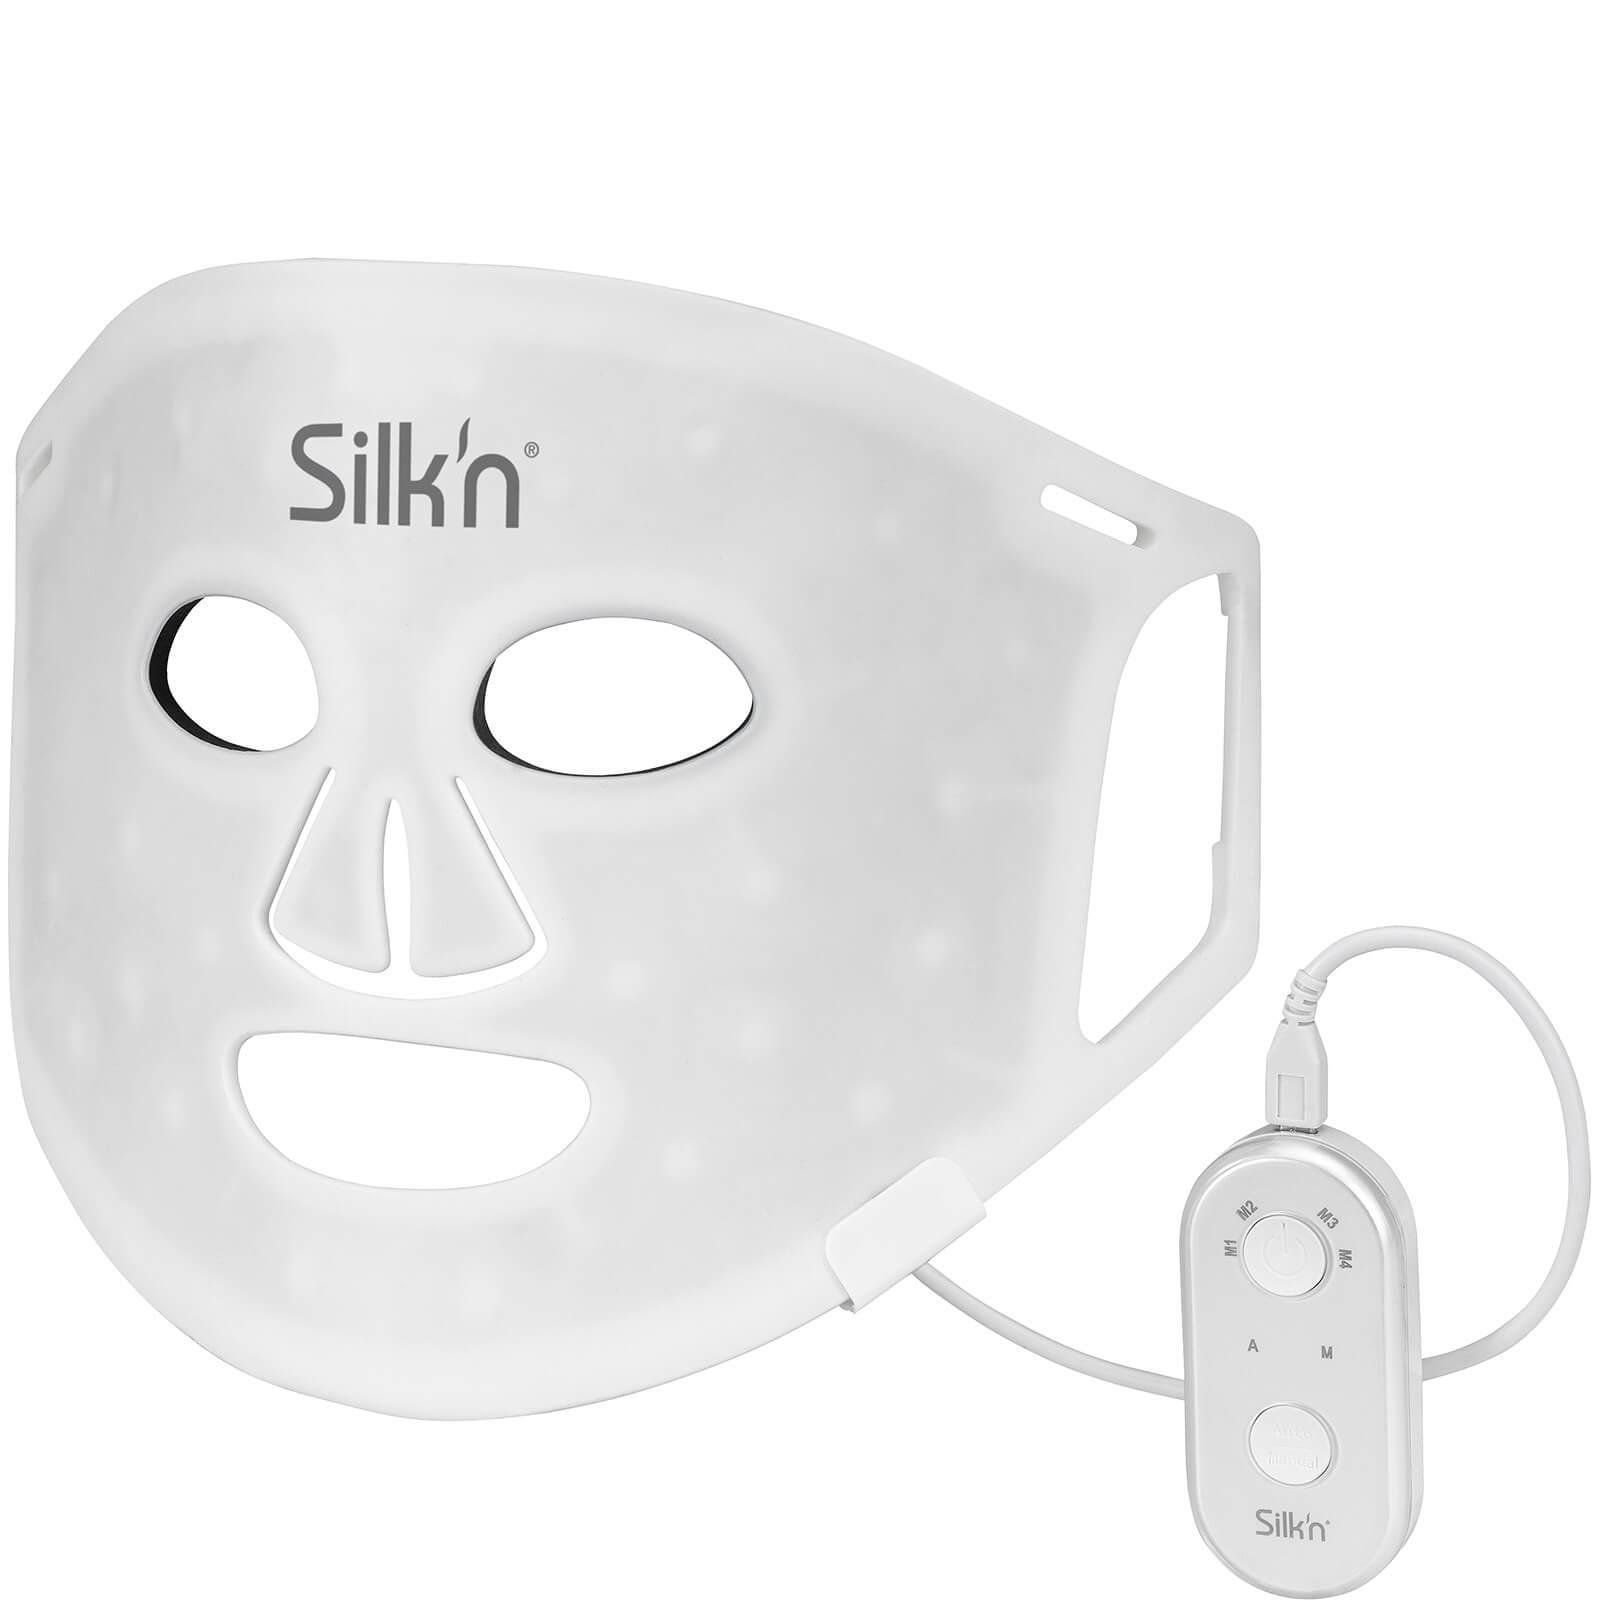 Image of Silk'n Facial LED Mask 100 LEDS